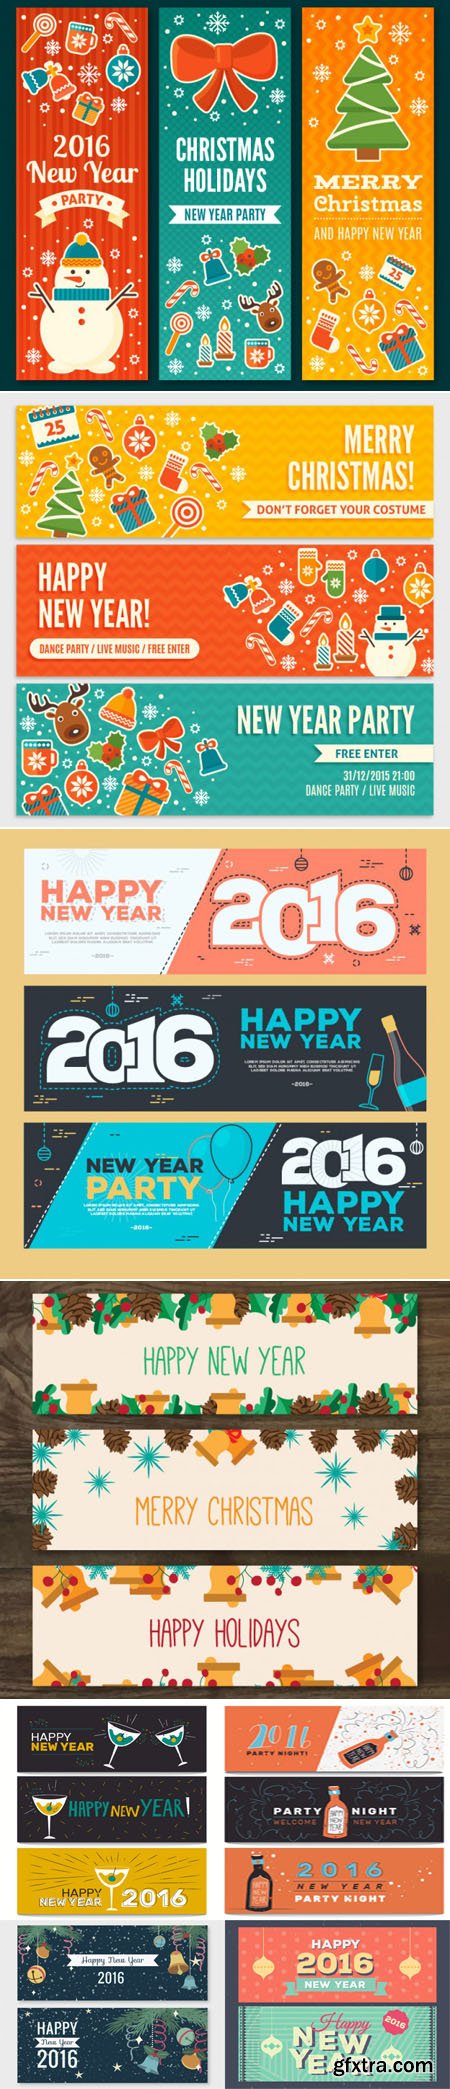 Cartoon New Year 2016 Banners in Vectors